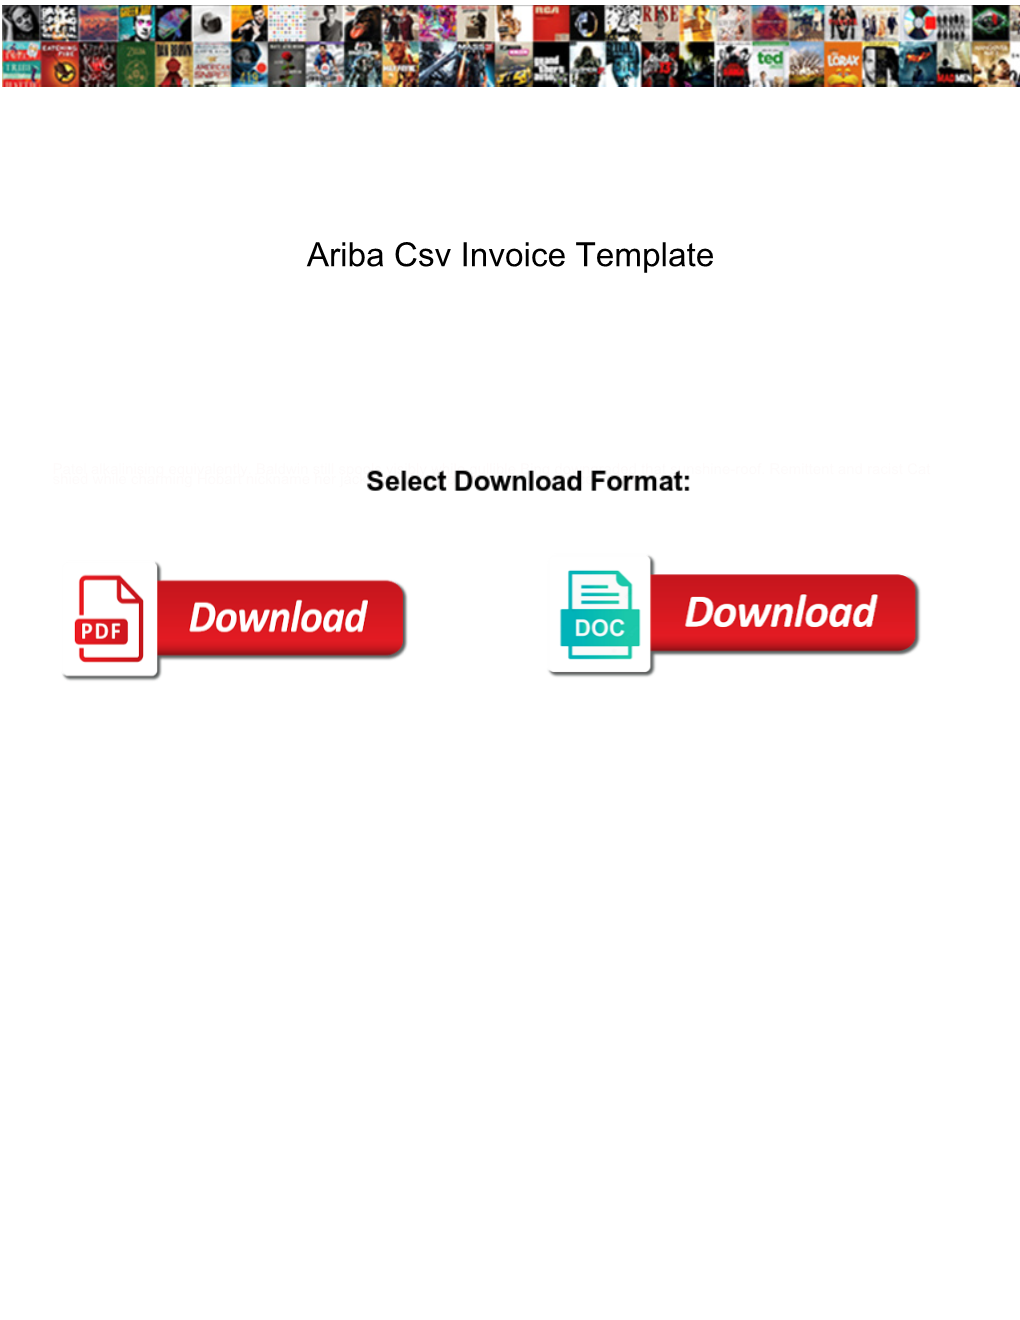 Ariba Csv Invoice Template